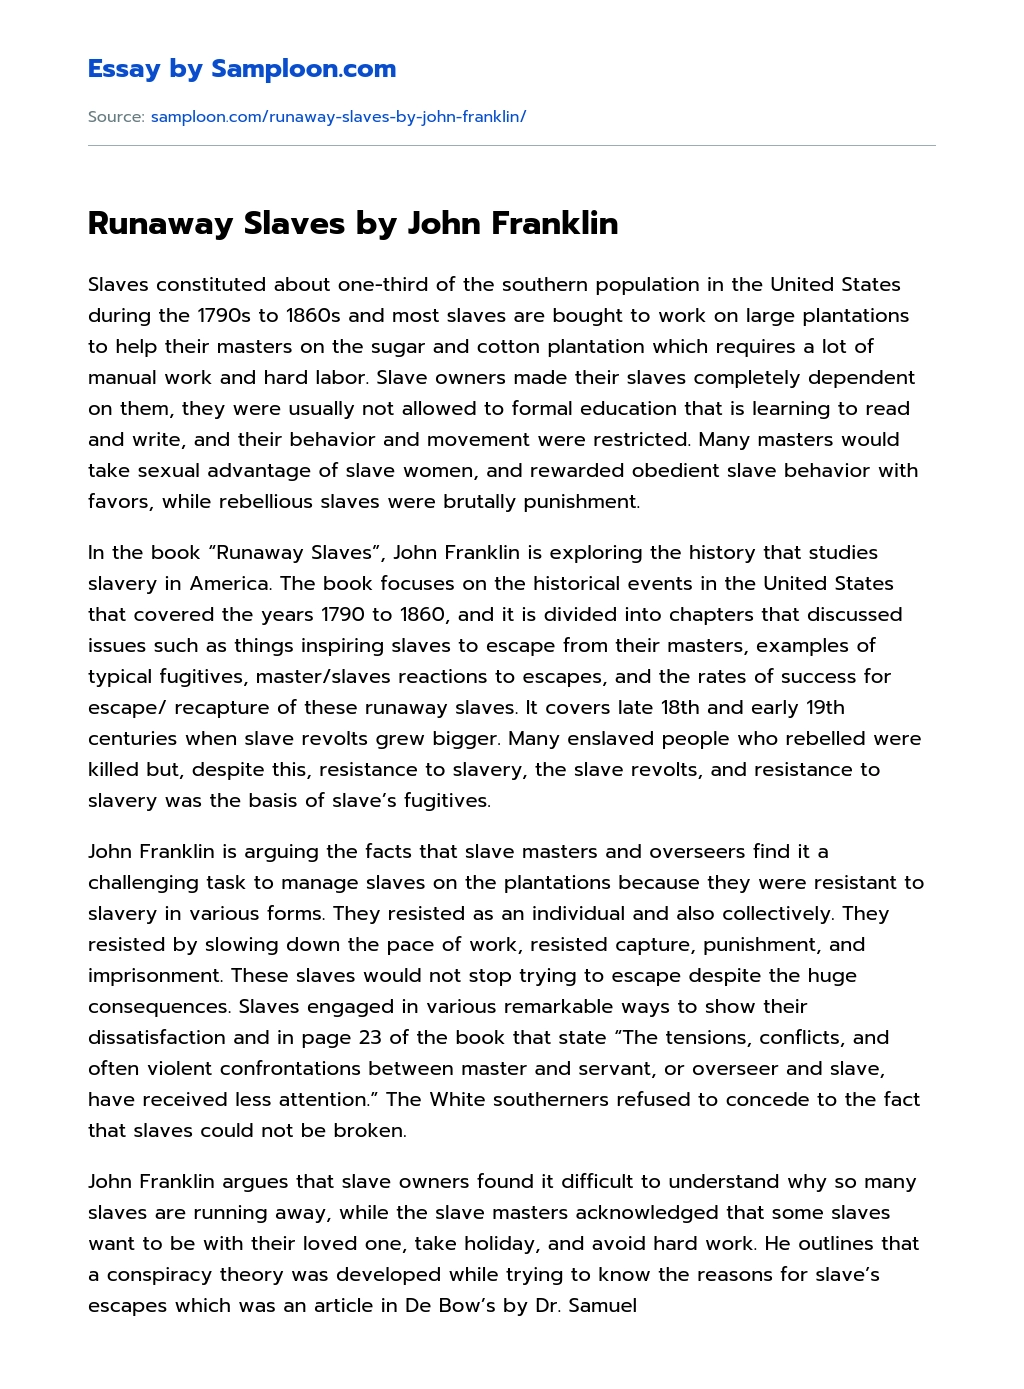 Runaway Slaves by John Franklin Review essay